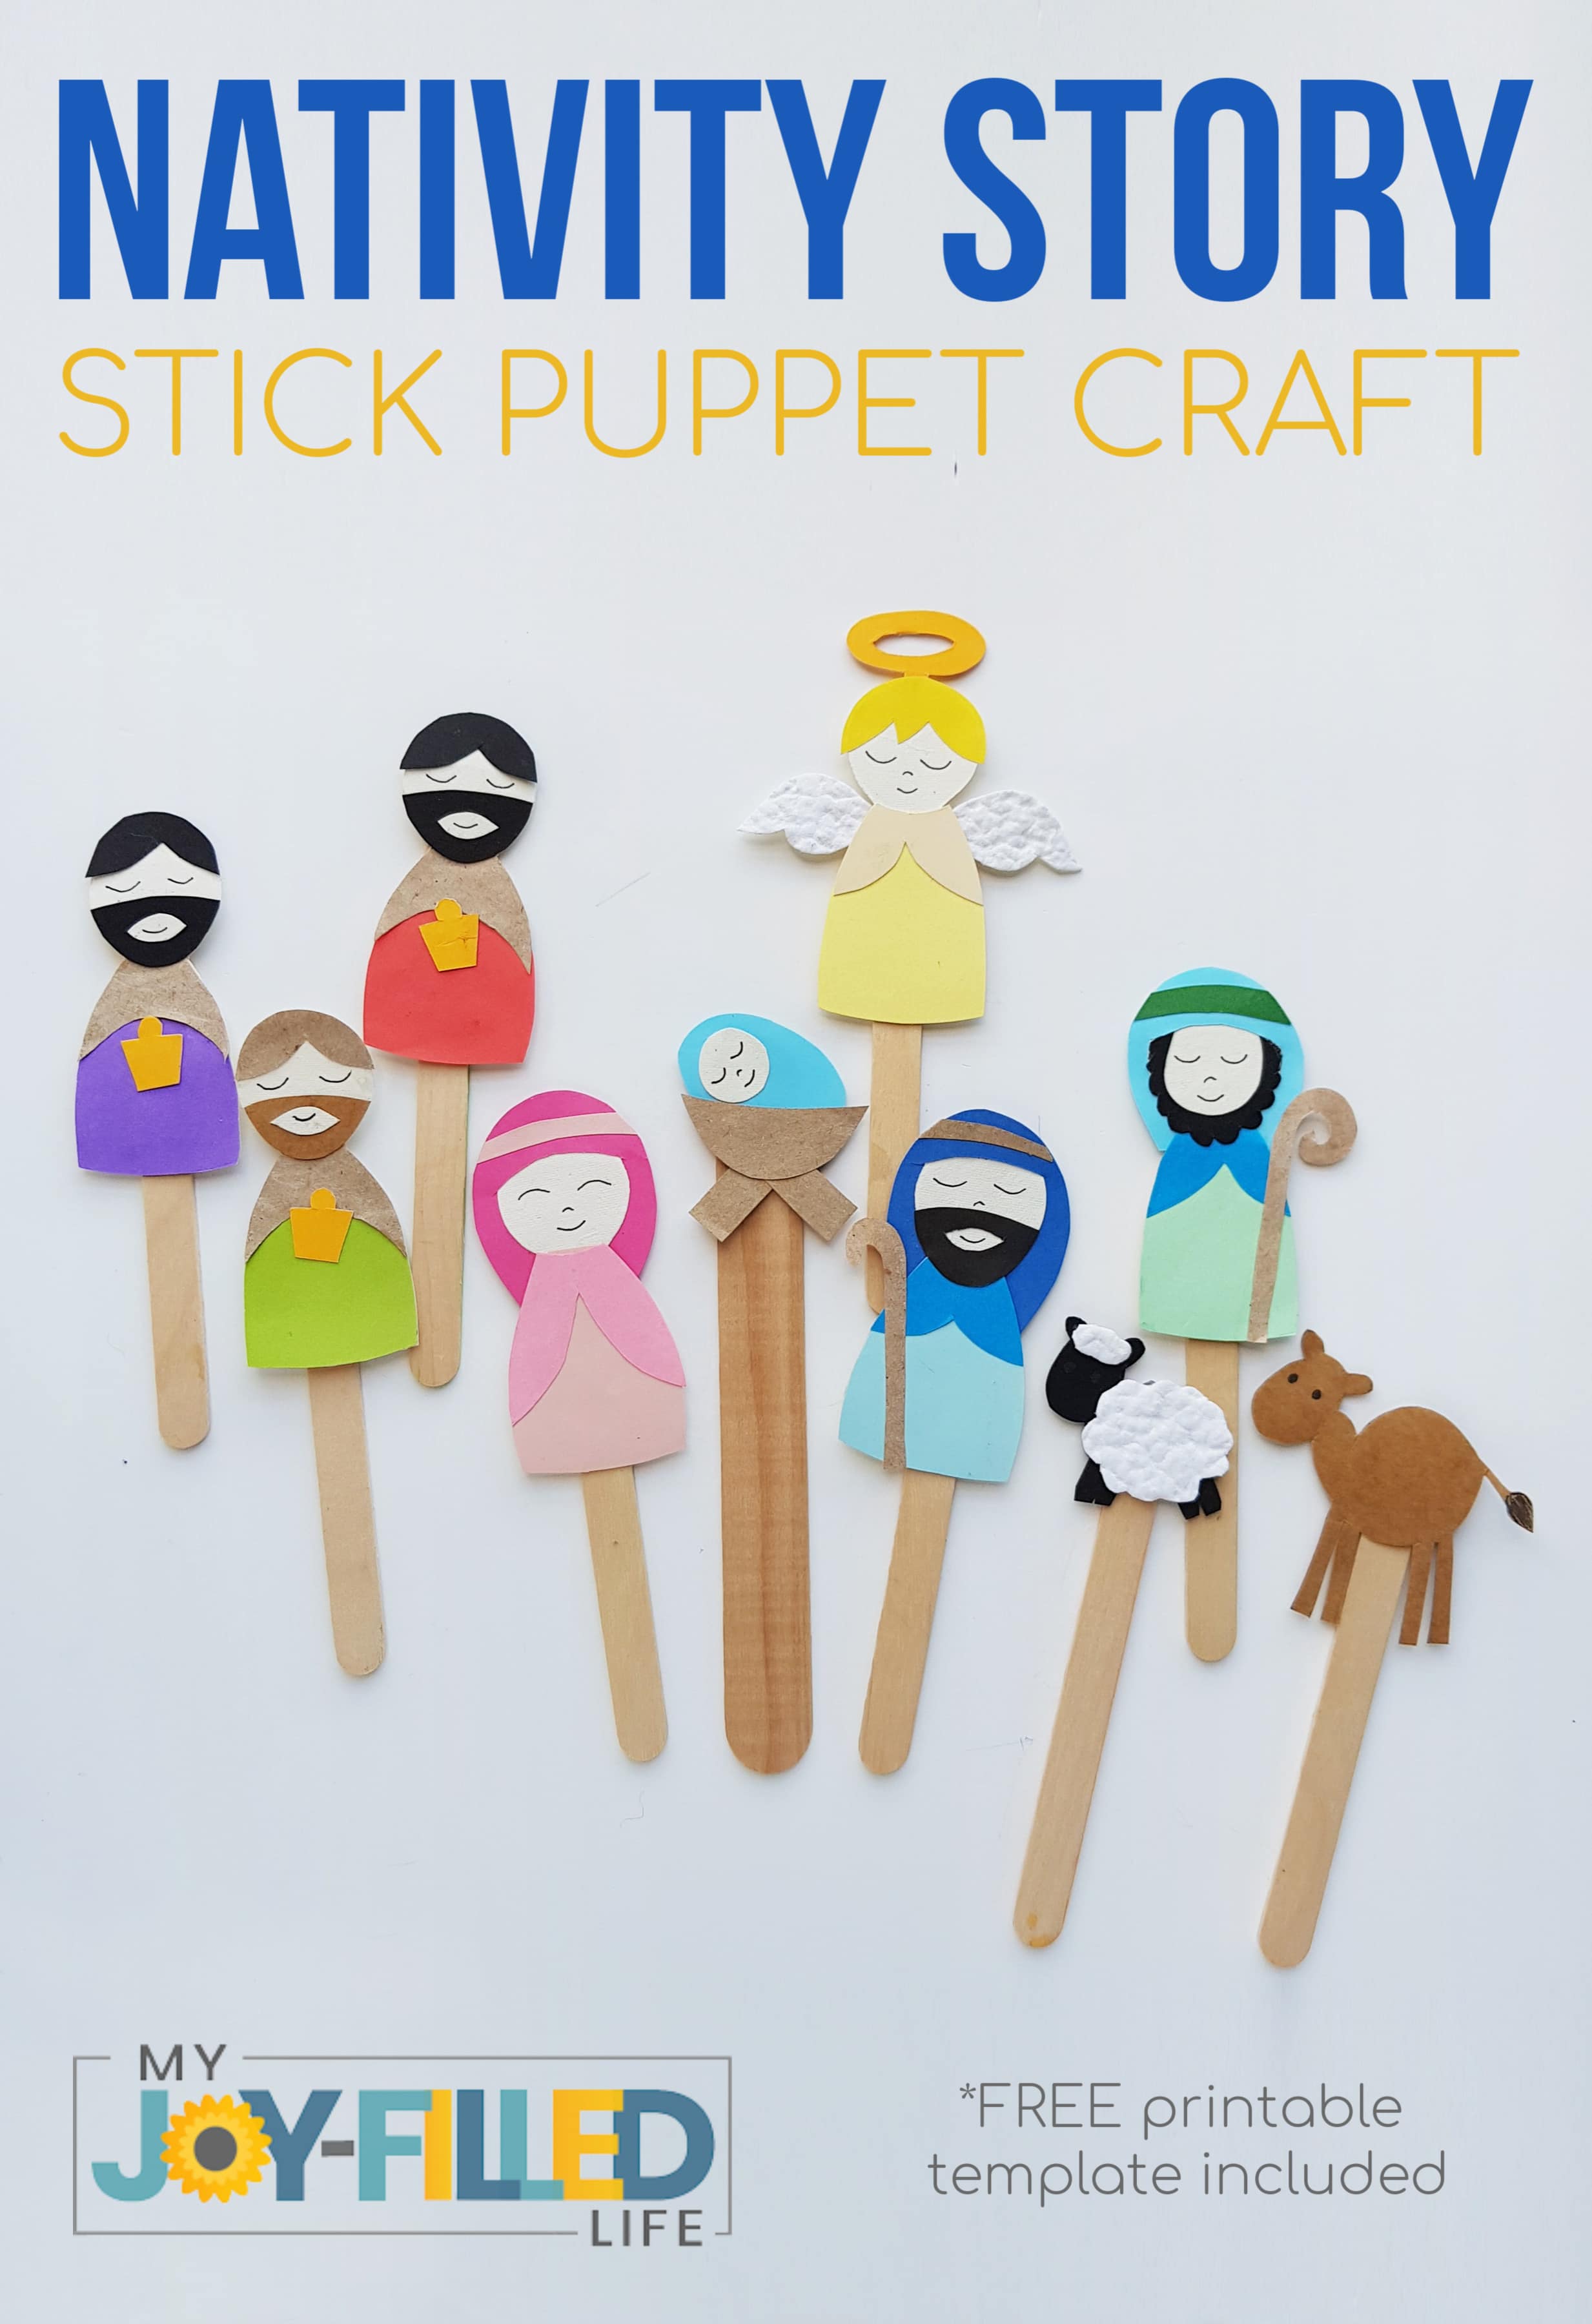 nativity-story-stick-puppet-craft-pin-1-template-my-joy-filled-life